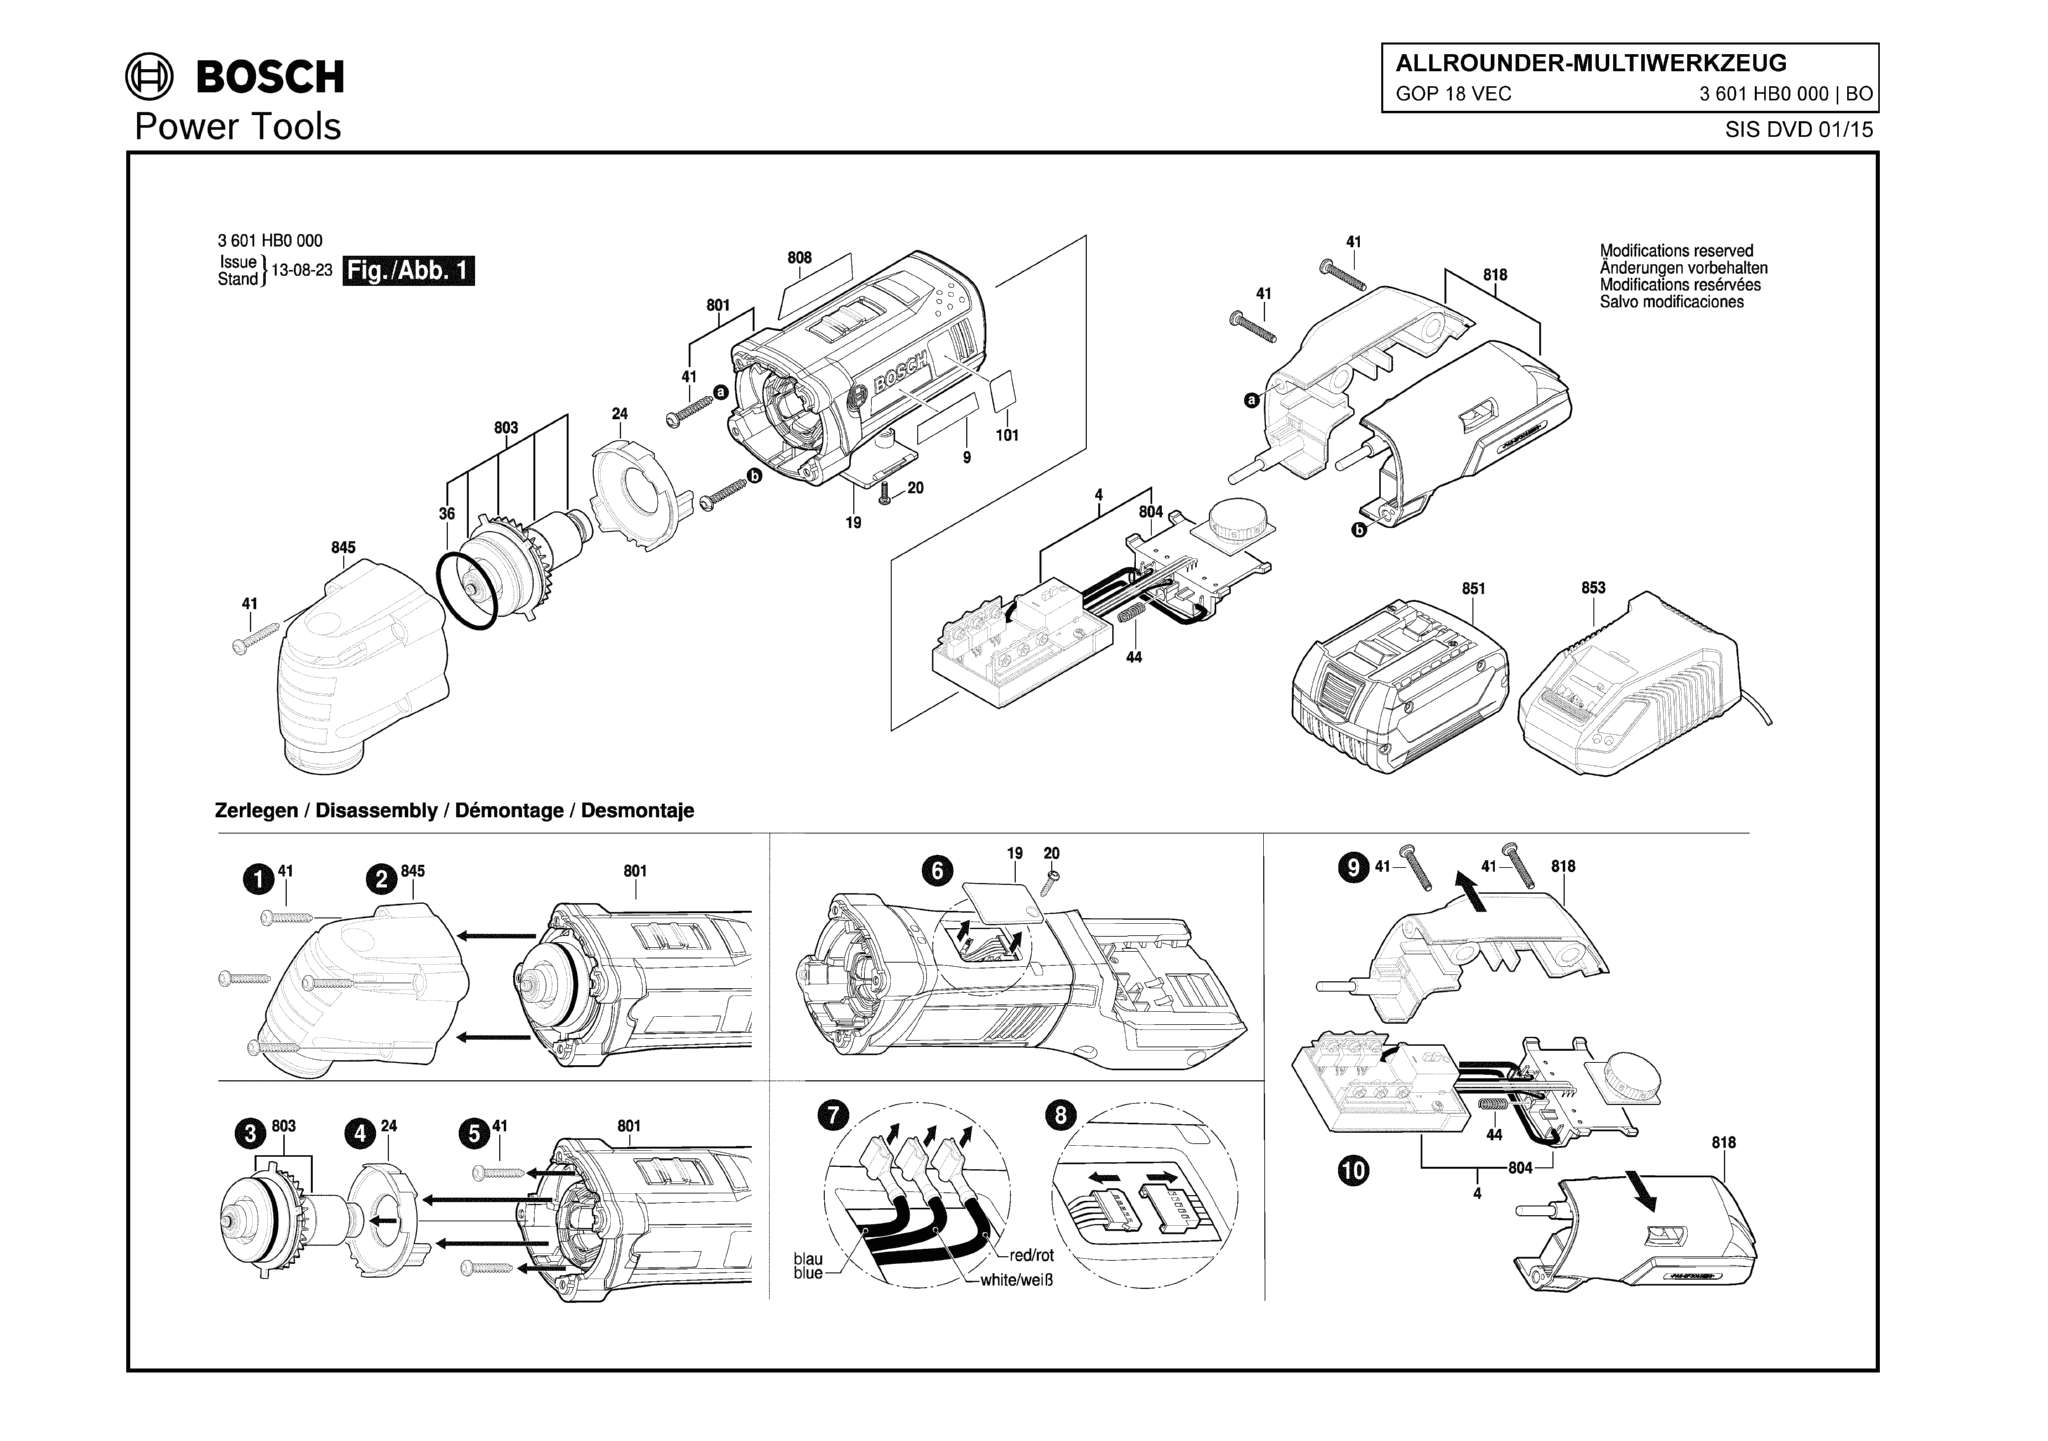 Запчасти, схема и деталировка Bosch GOP 18 VEC (ТИП 3601HB0000)